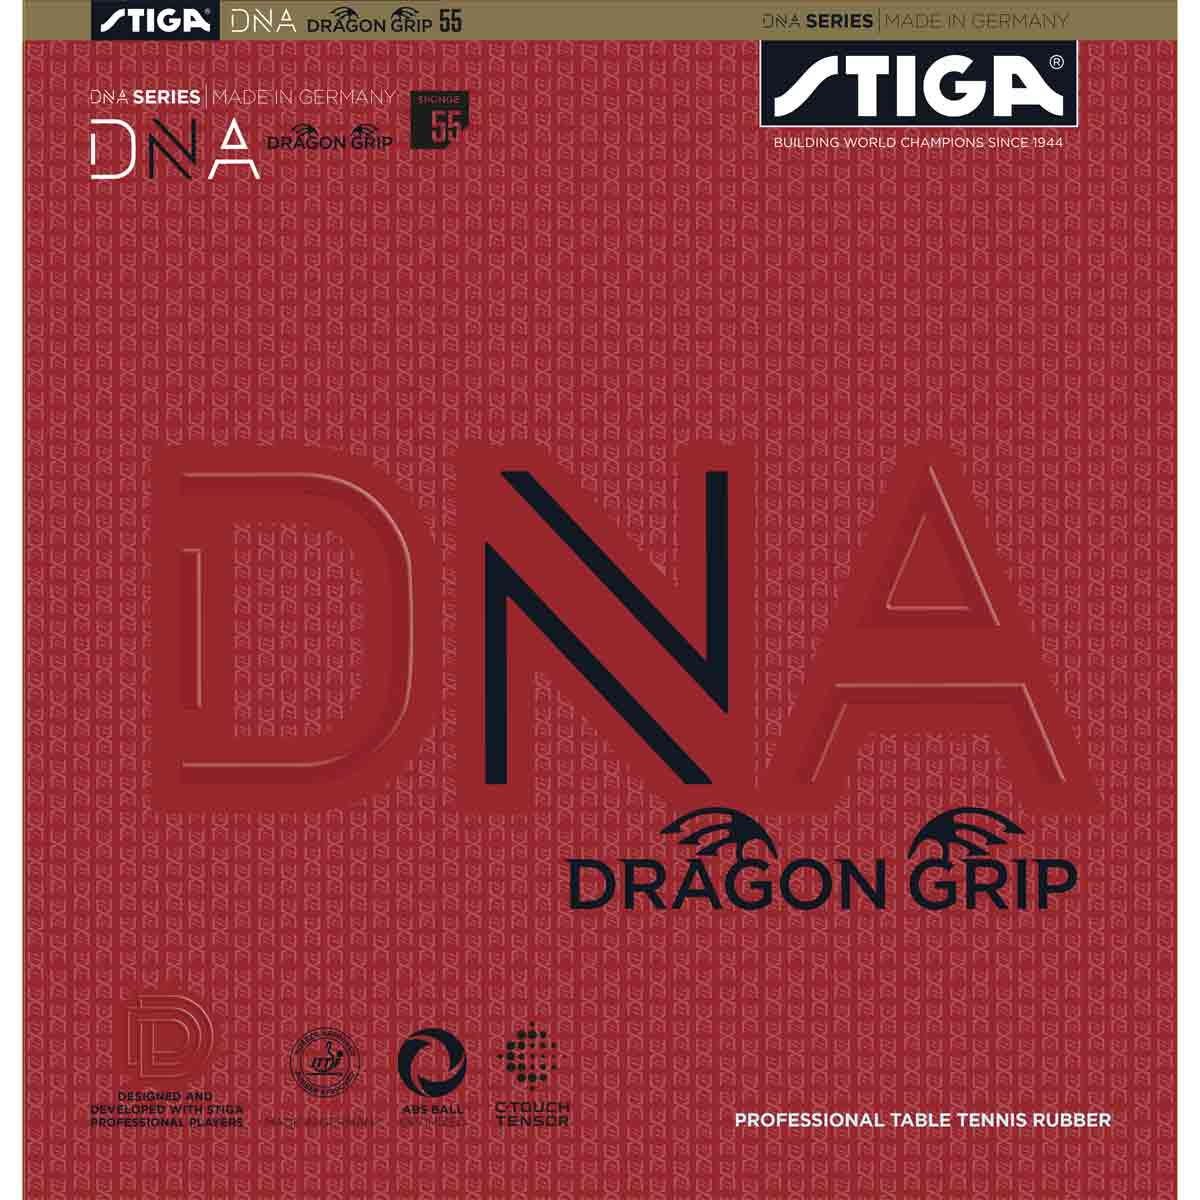 STIGA Rubber DNA Dragon Grip 55 - Table Tennis Rubber